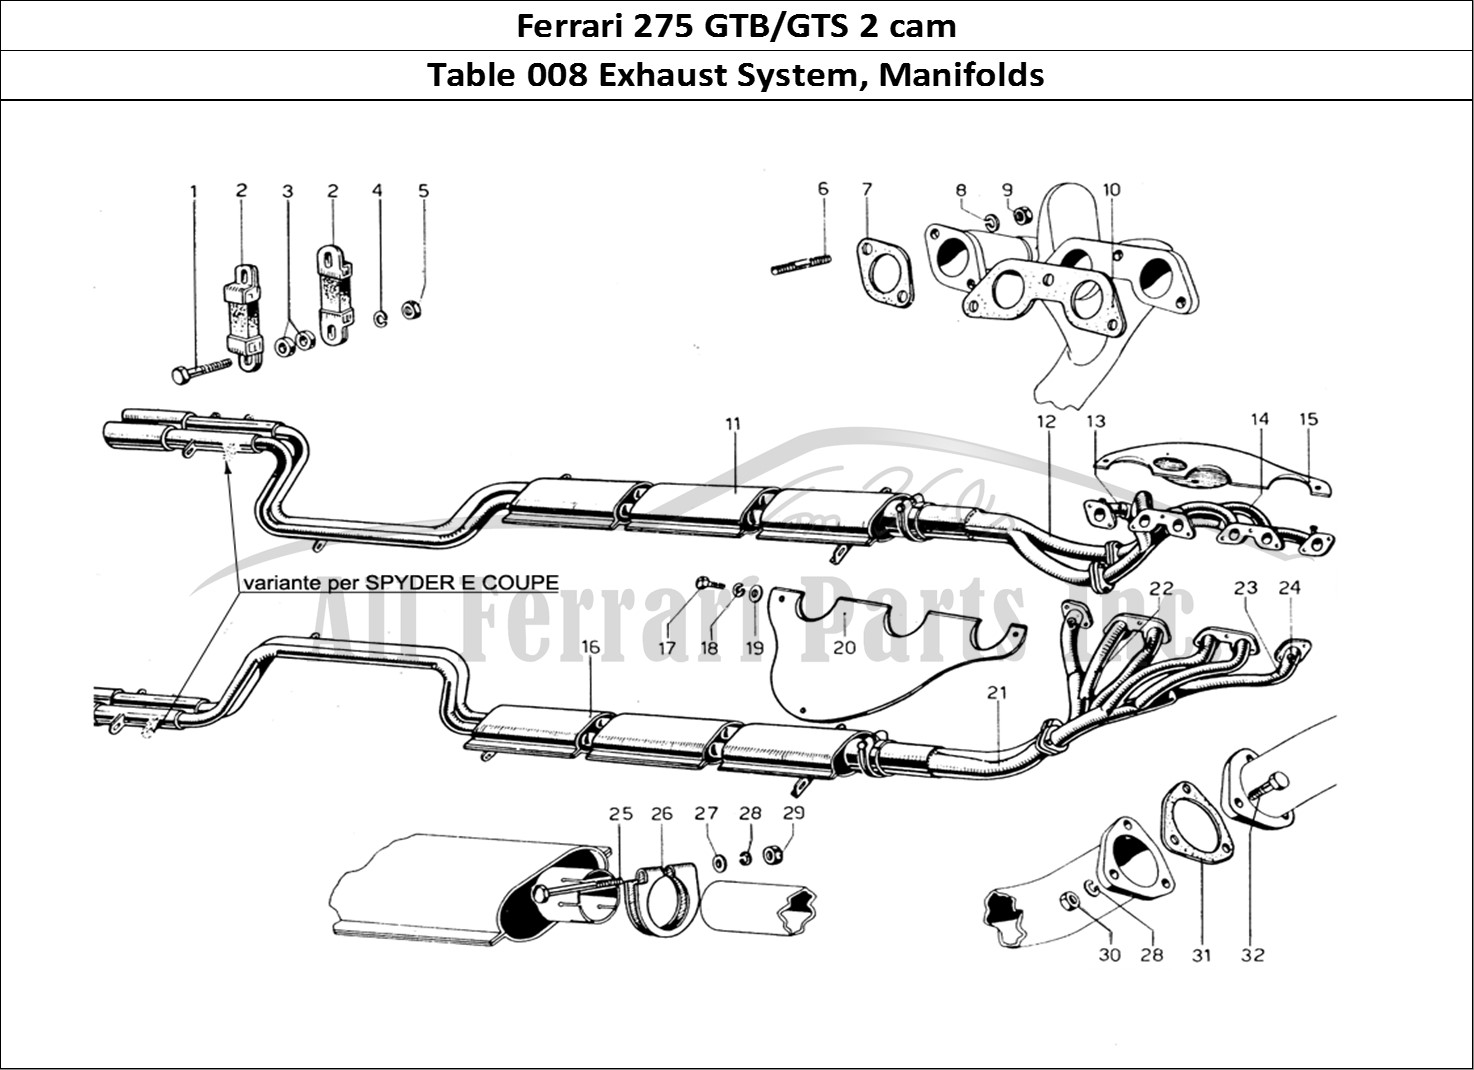 Ferrari Parts Ferrari 275 GTB/GTS 2 cam Page 008 Exhaust & Manifolds